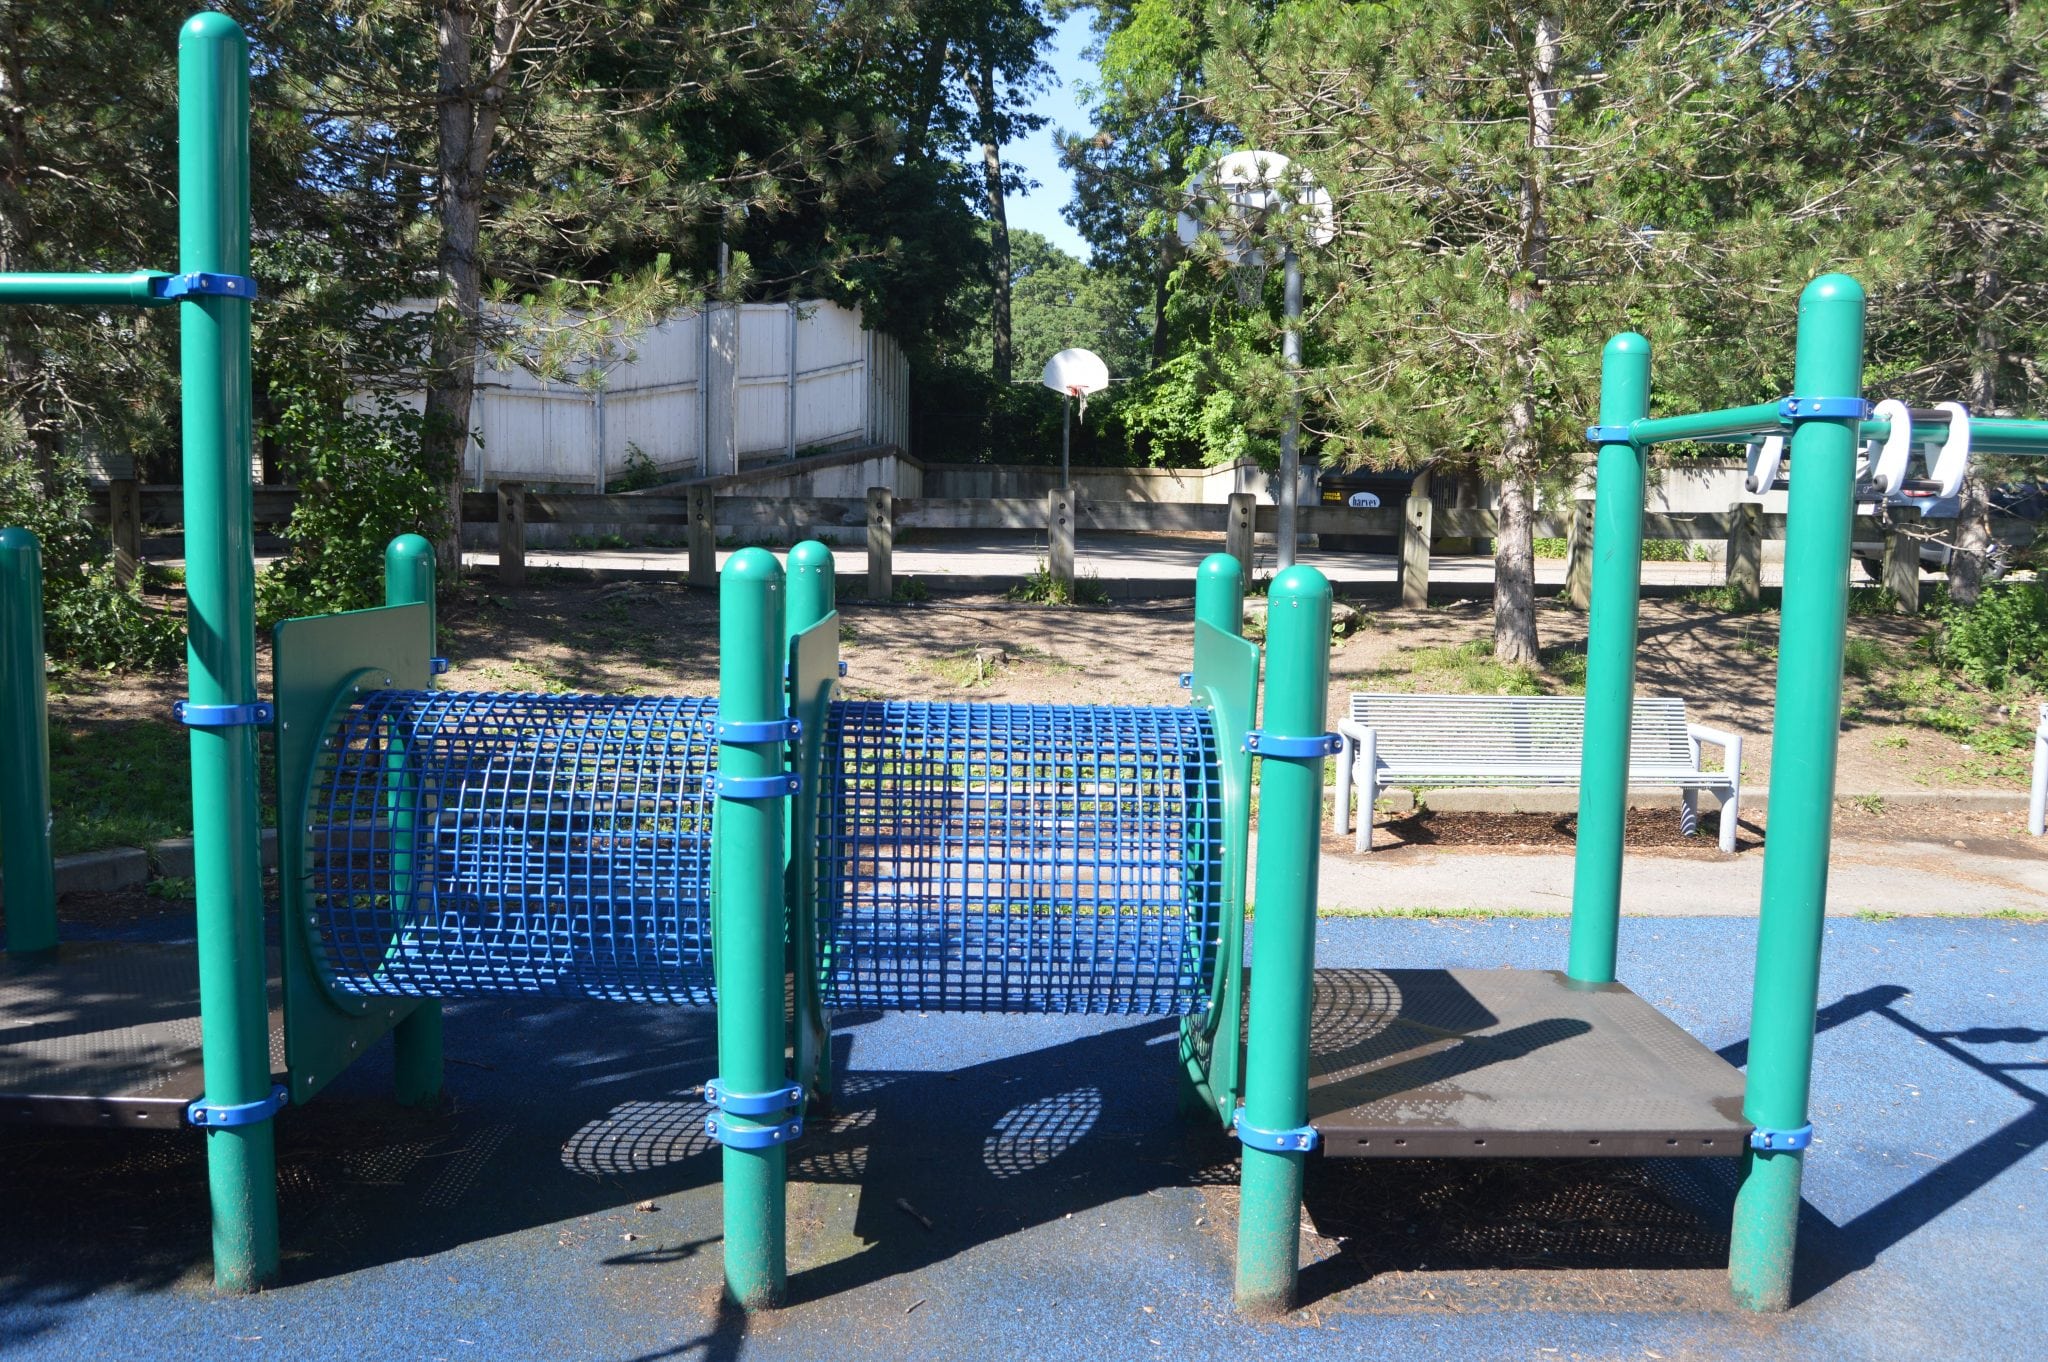 sprague elementary school playground, wellesley